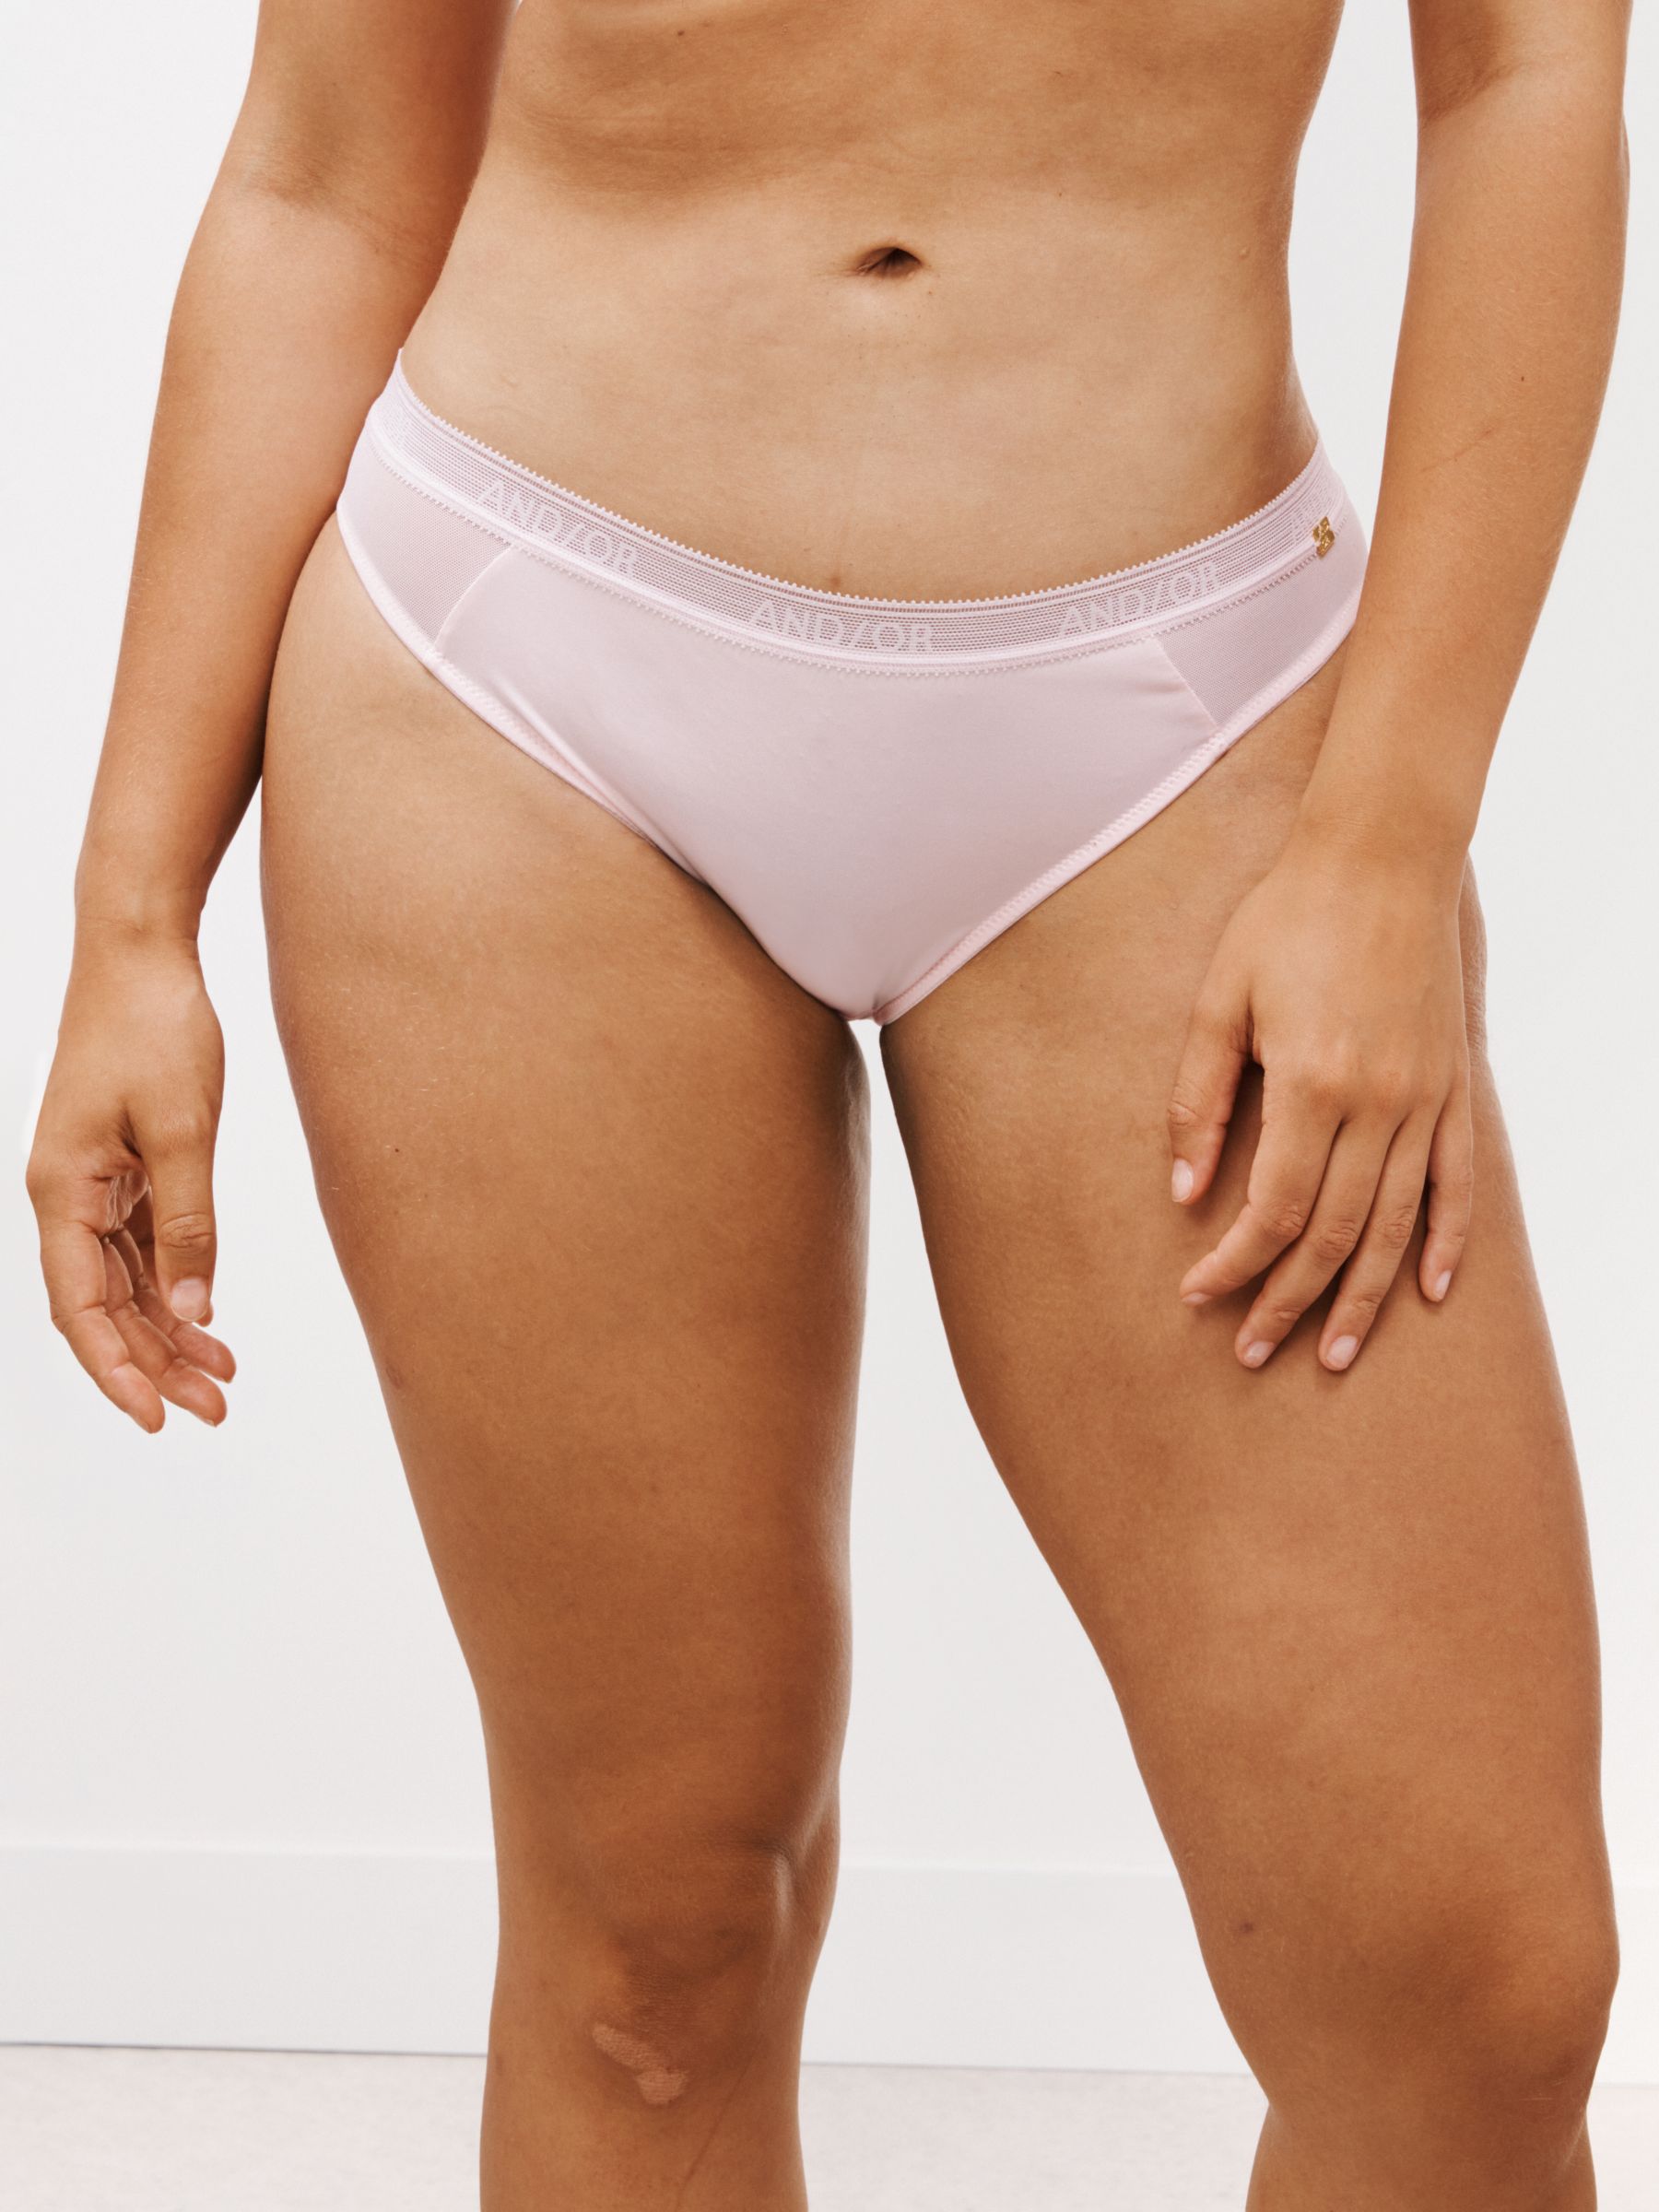 Oli London on X: The new face of women's underwear brand Bonds